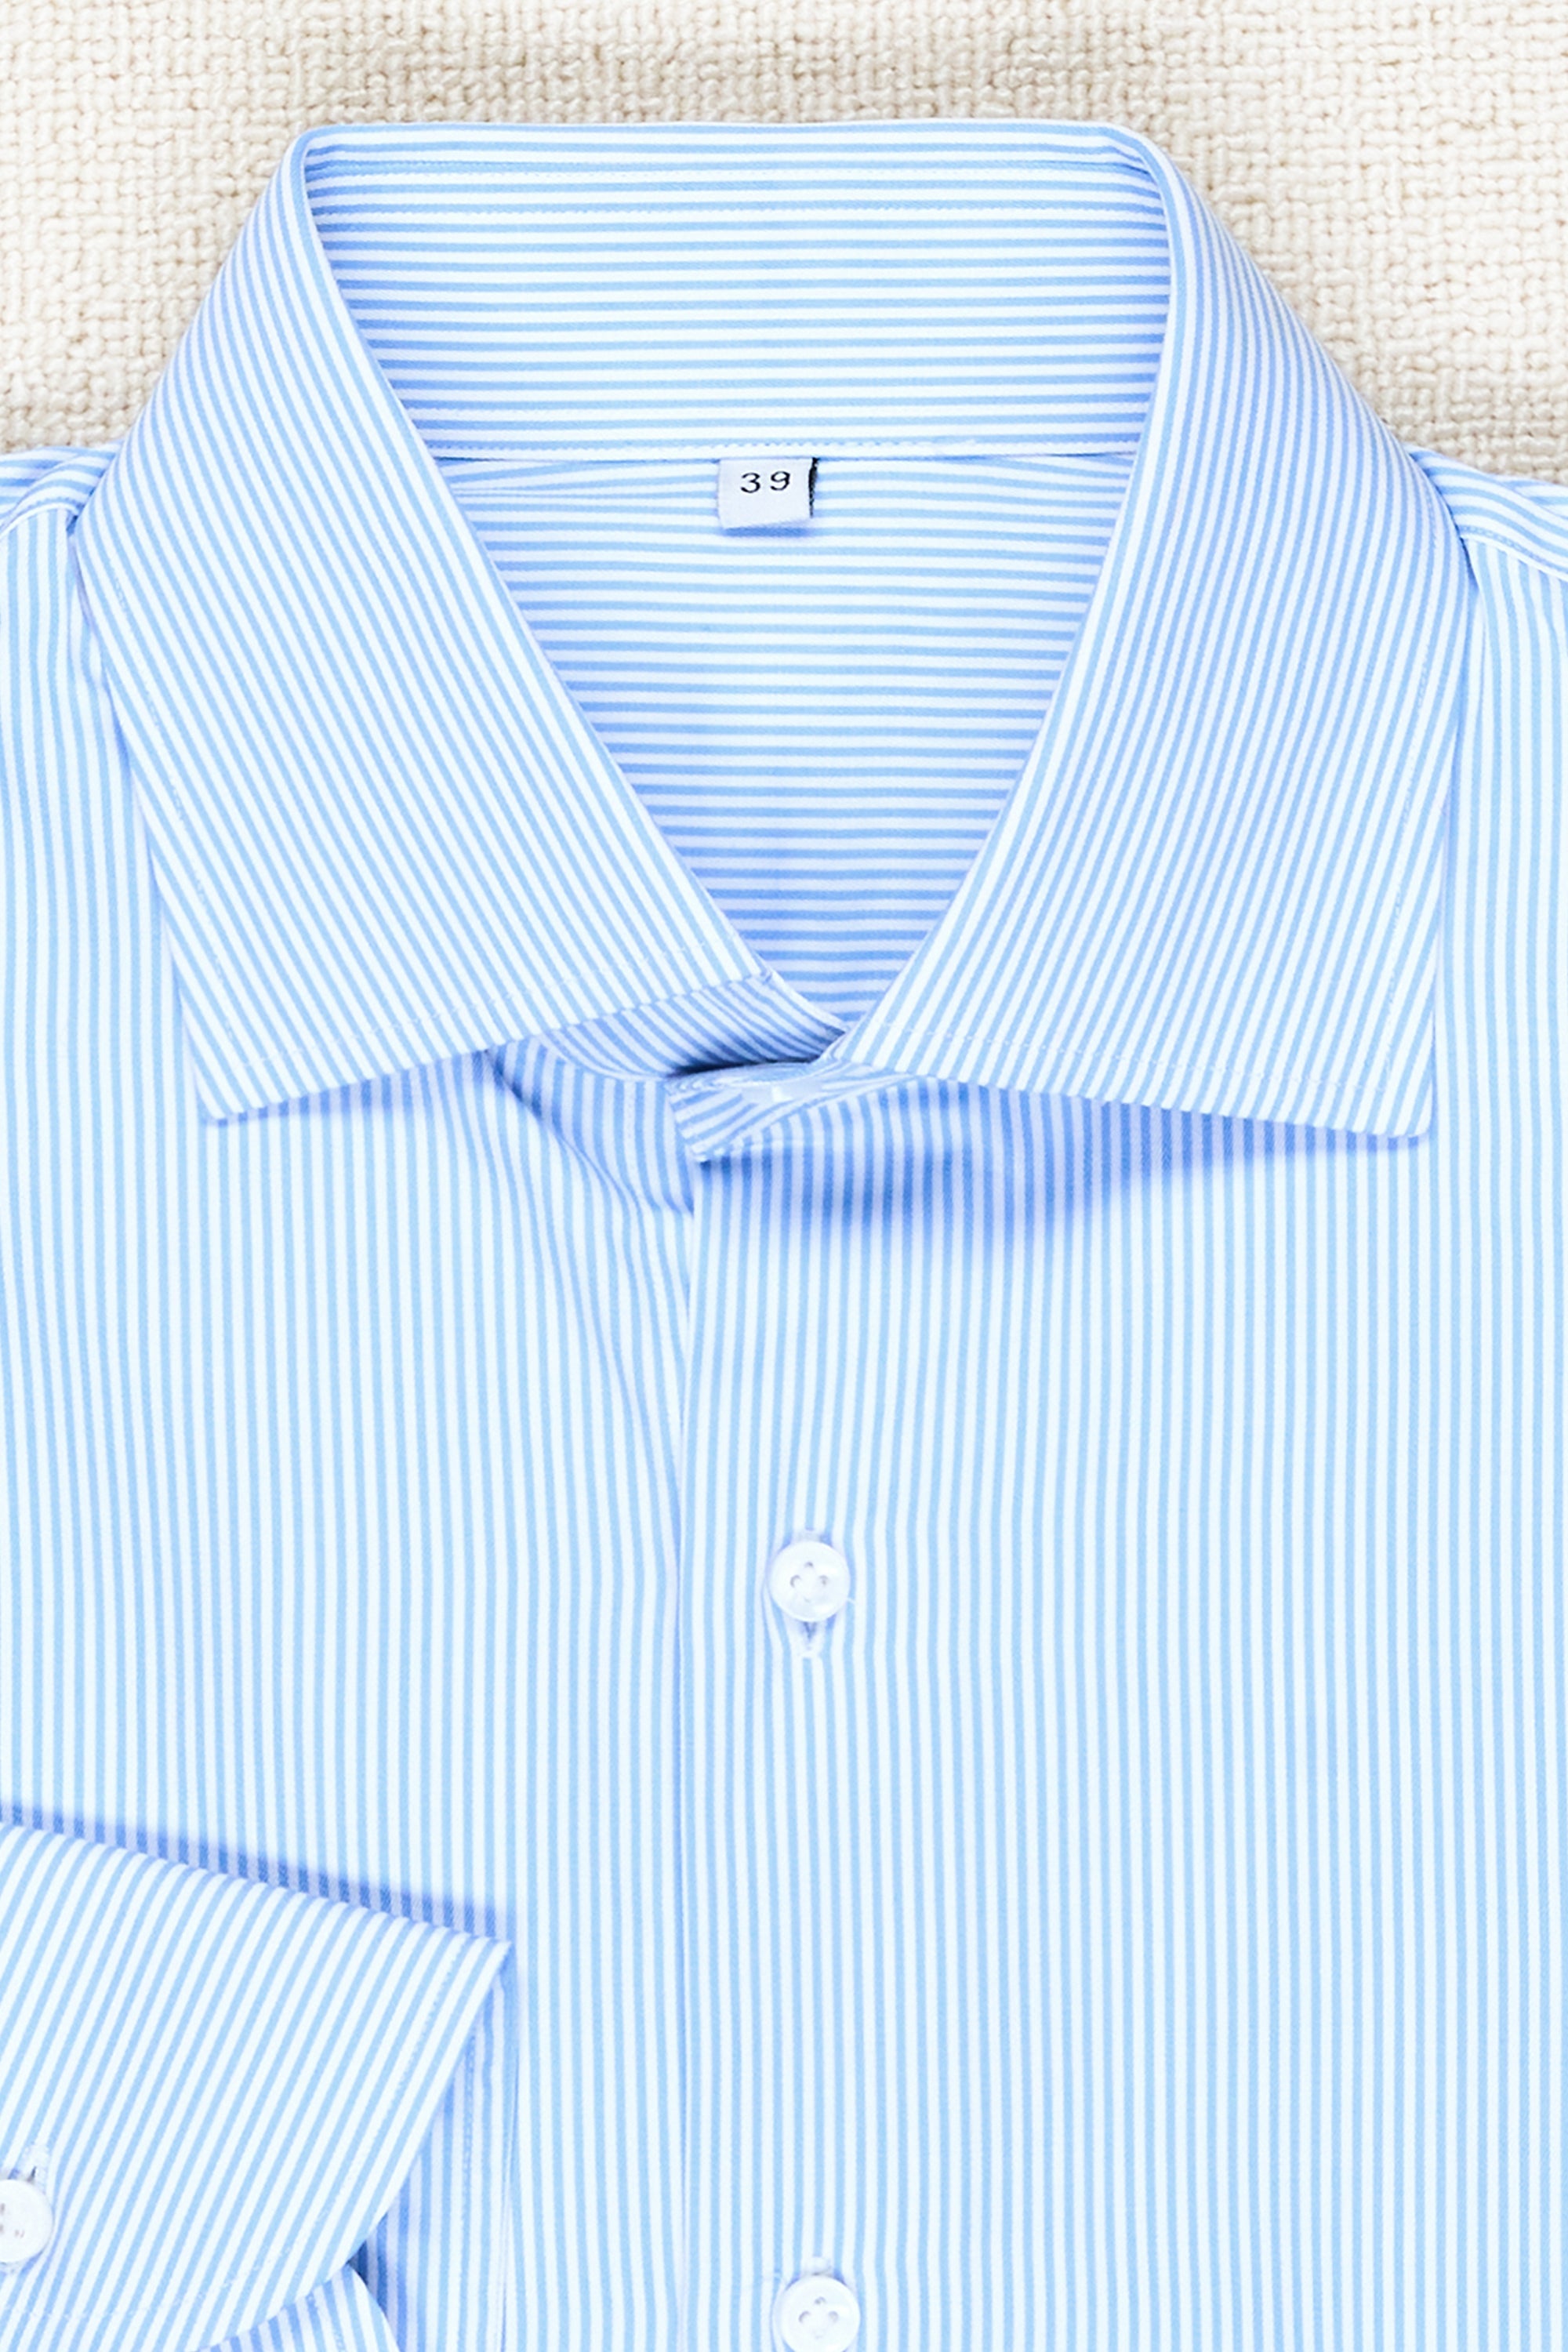 P. Johnson Sky Blue Stripe Cotton Twill Spread Collar Shirt